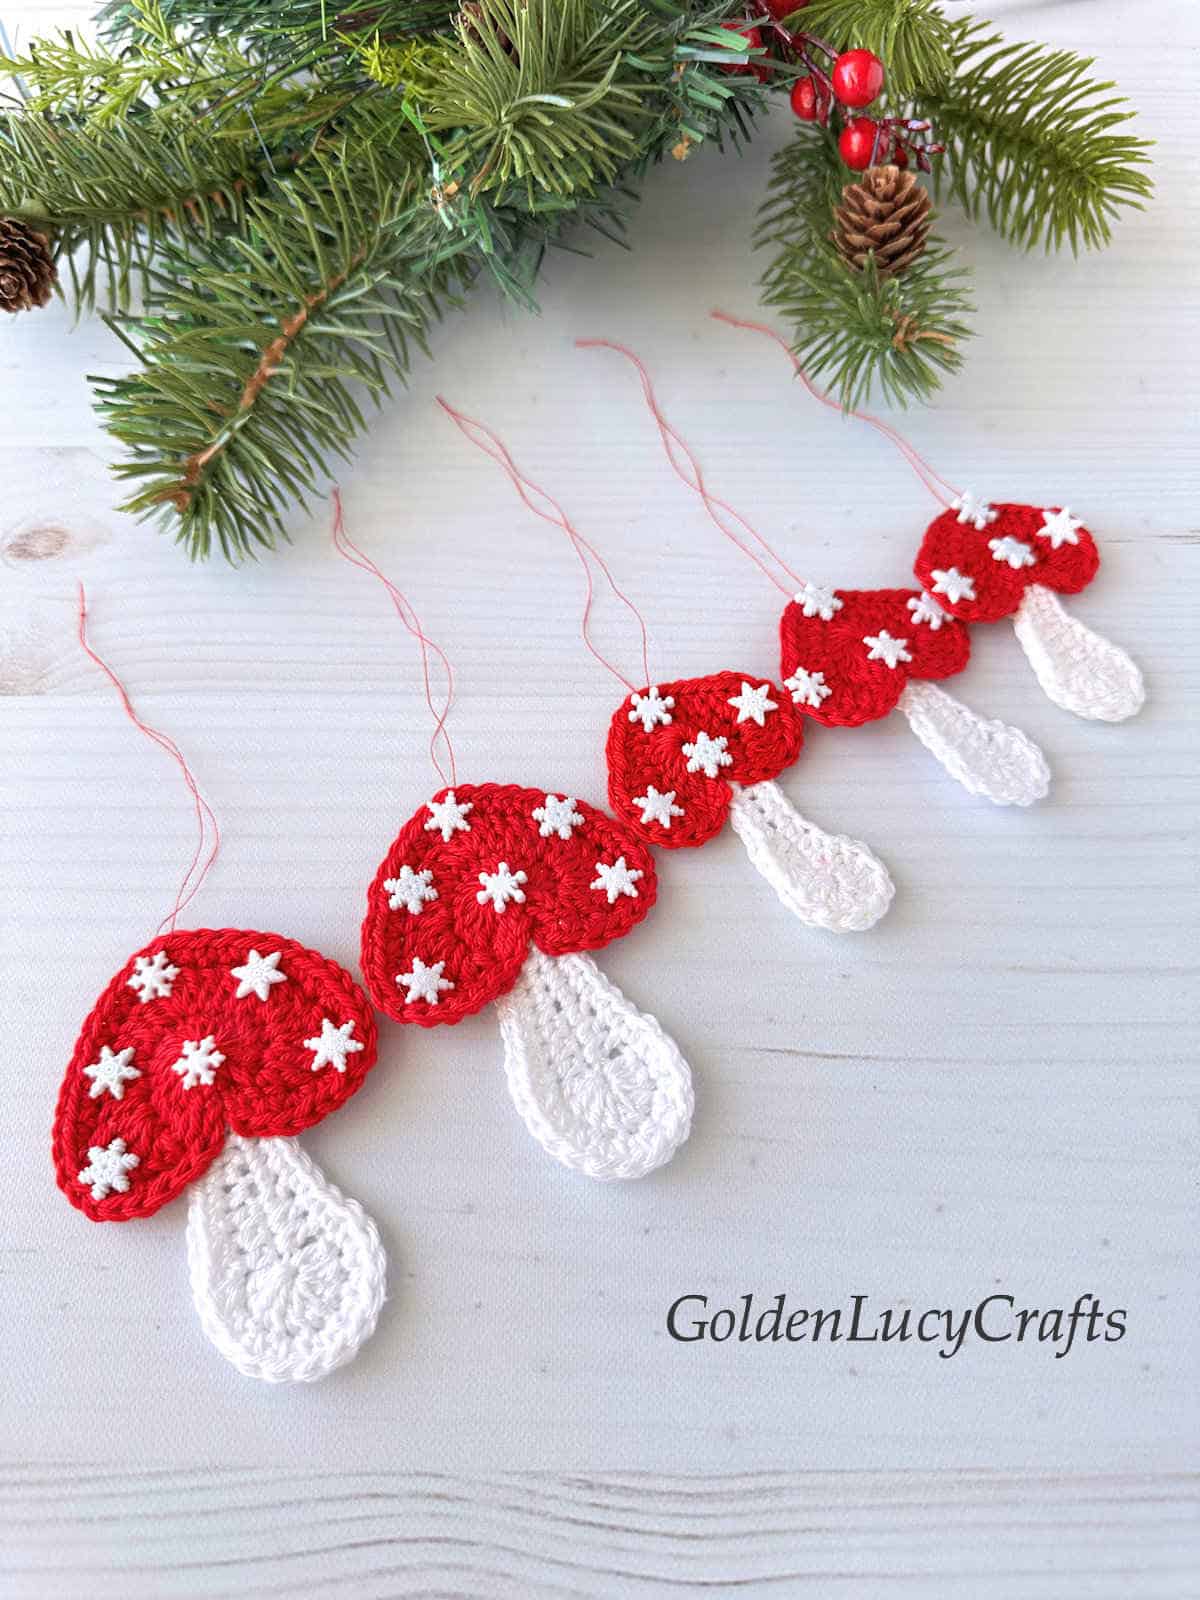 Five crocheted mushroom ornaments.